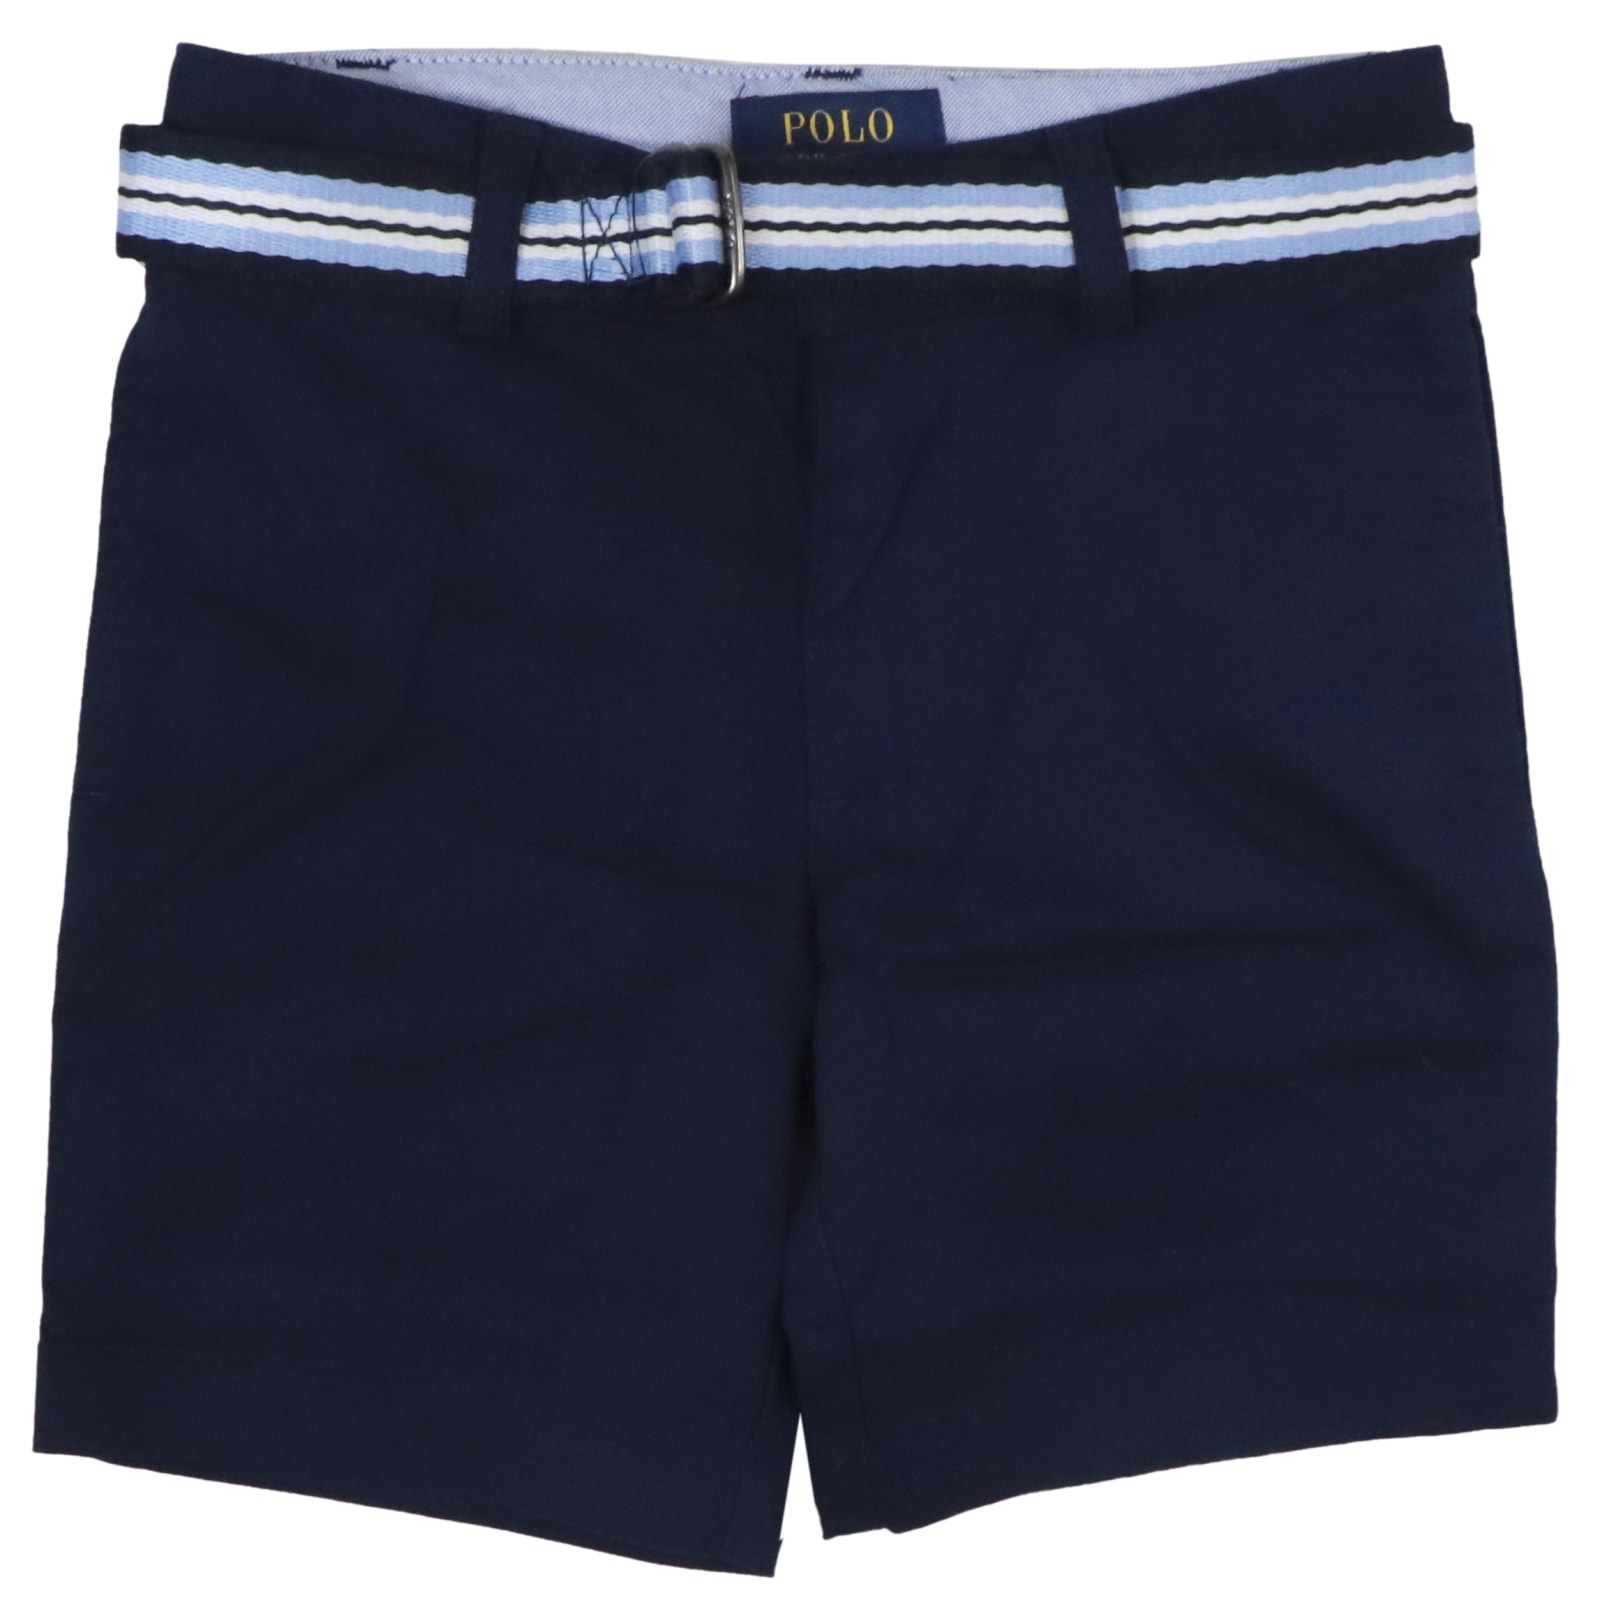 Polo Ralph Lauren Kids' Cotton Shorts